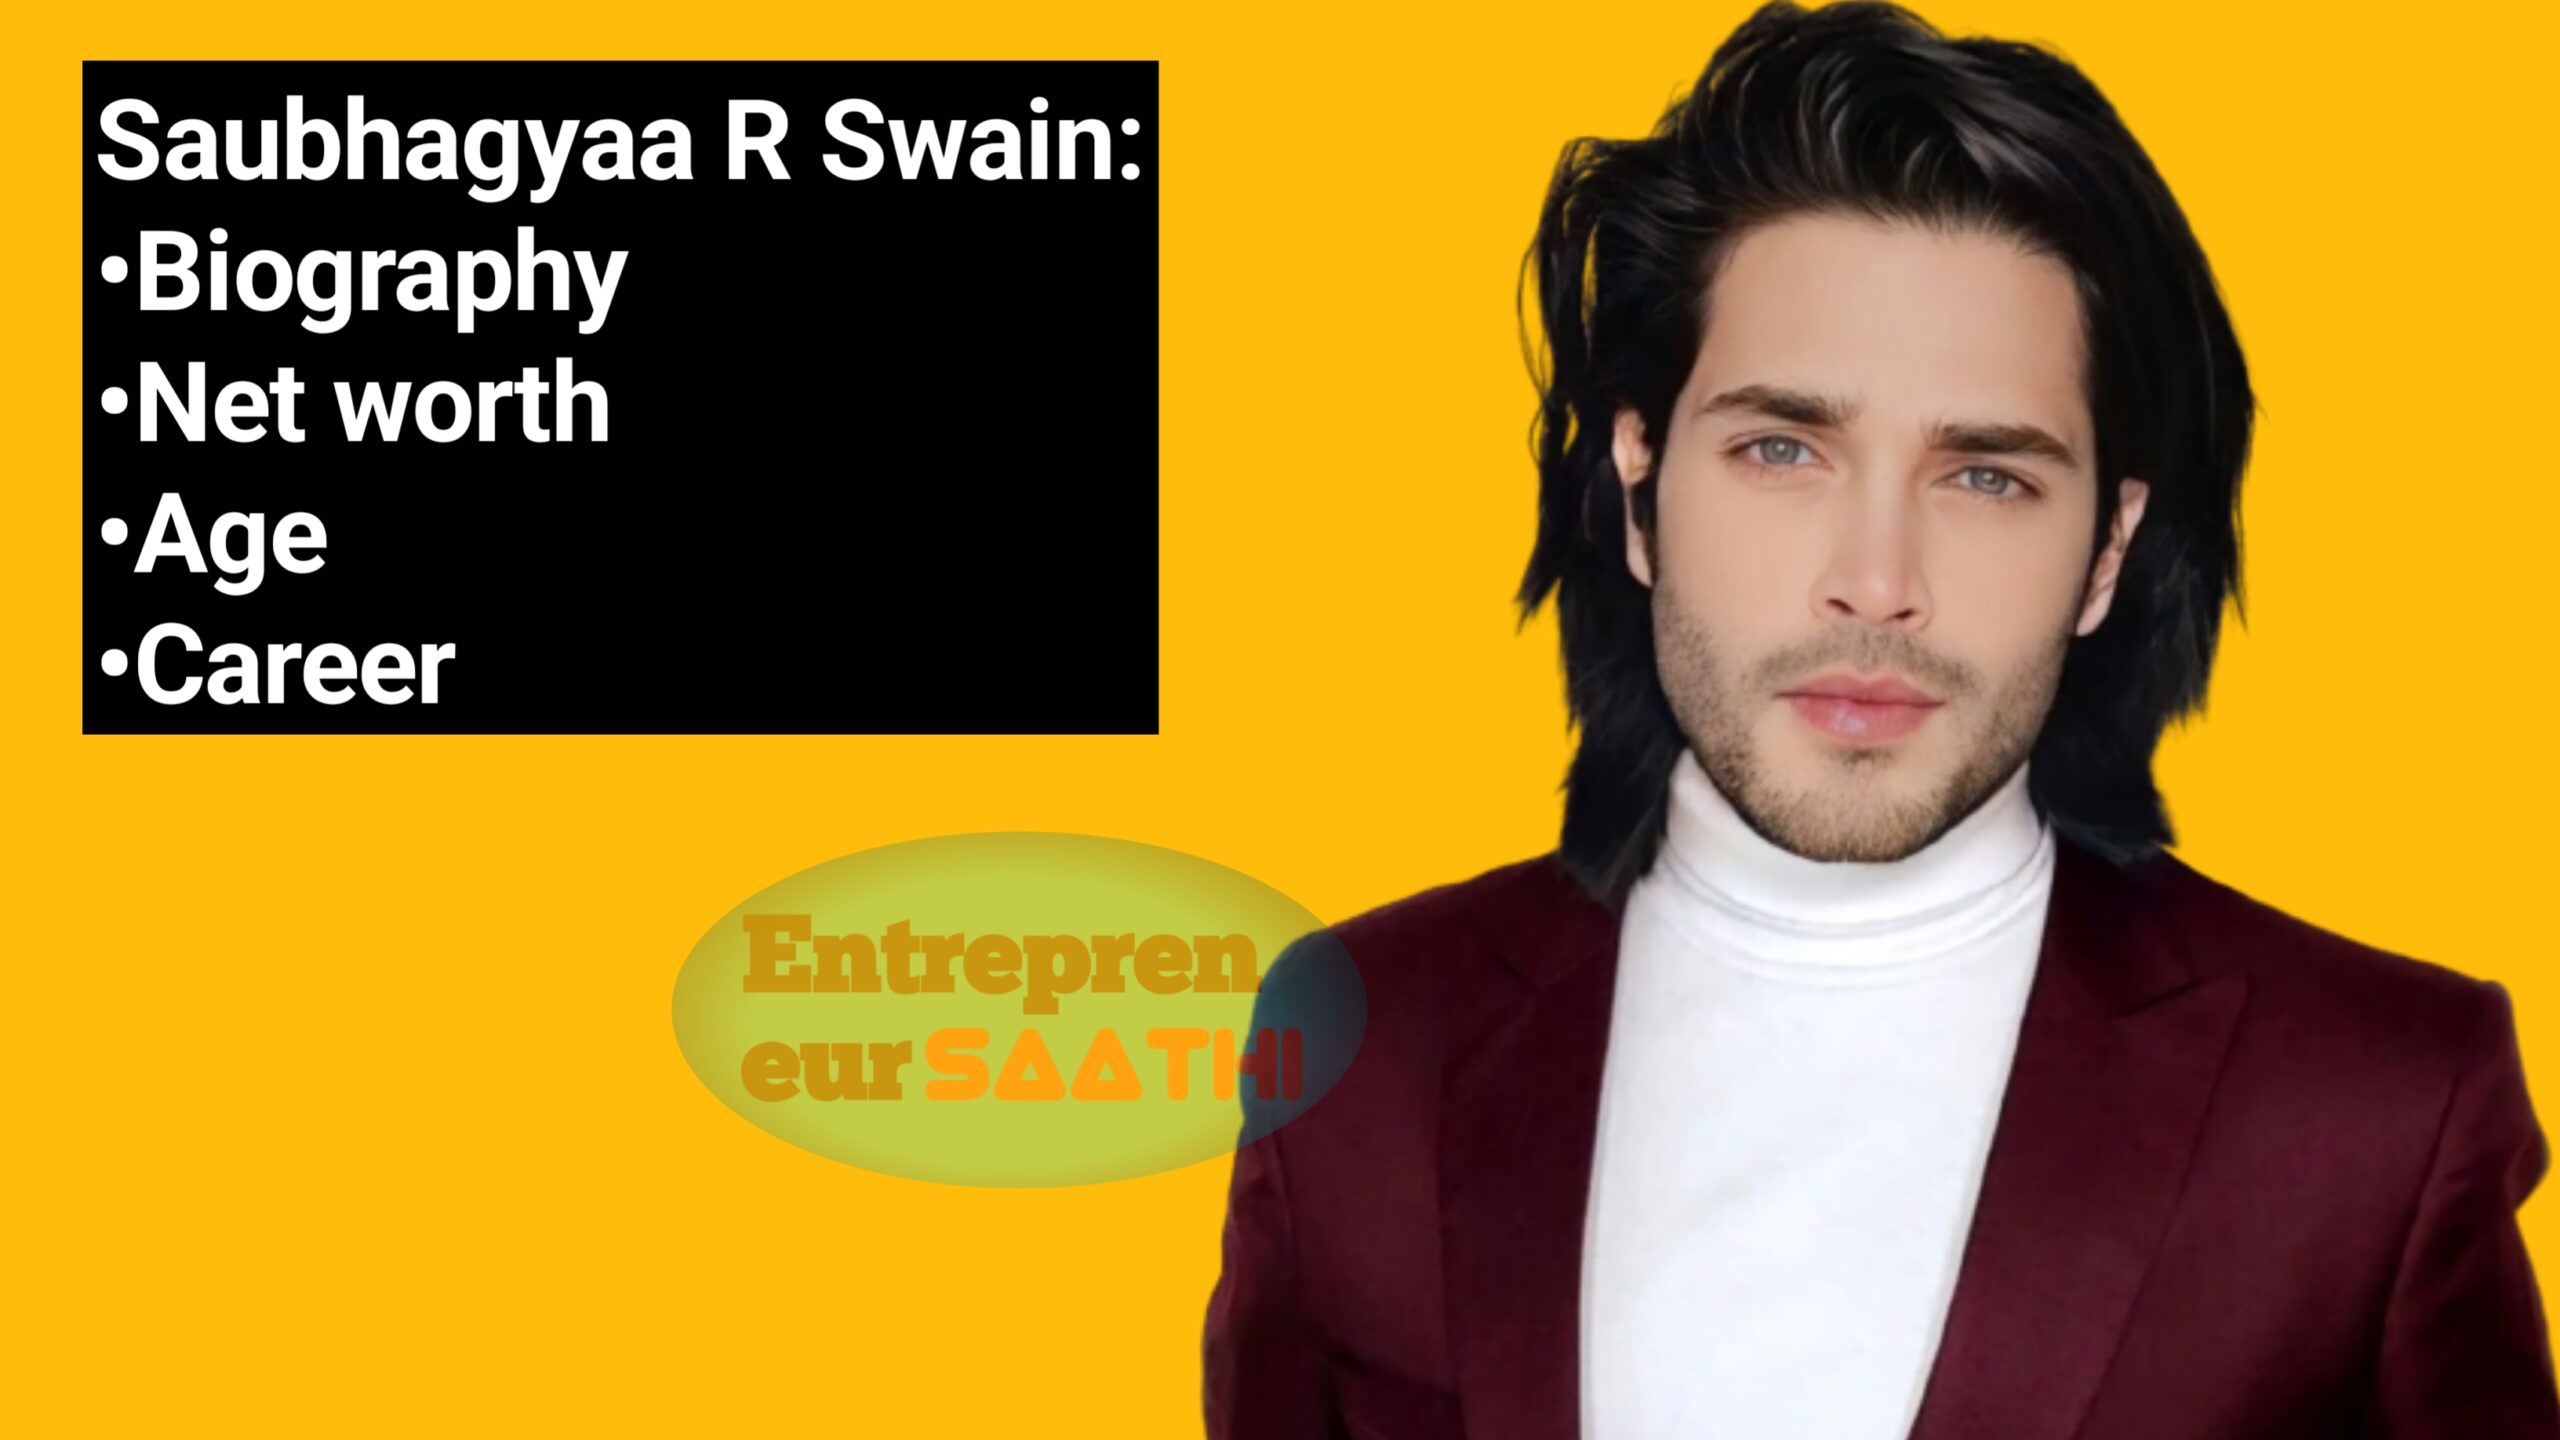 Saubhagyaa R. Swain is Europe's powerful businessman.